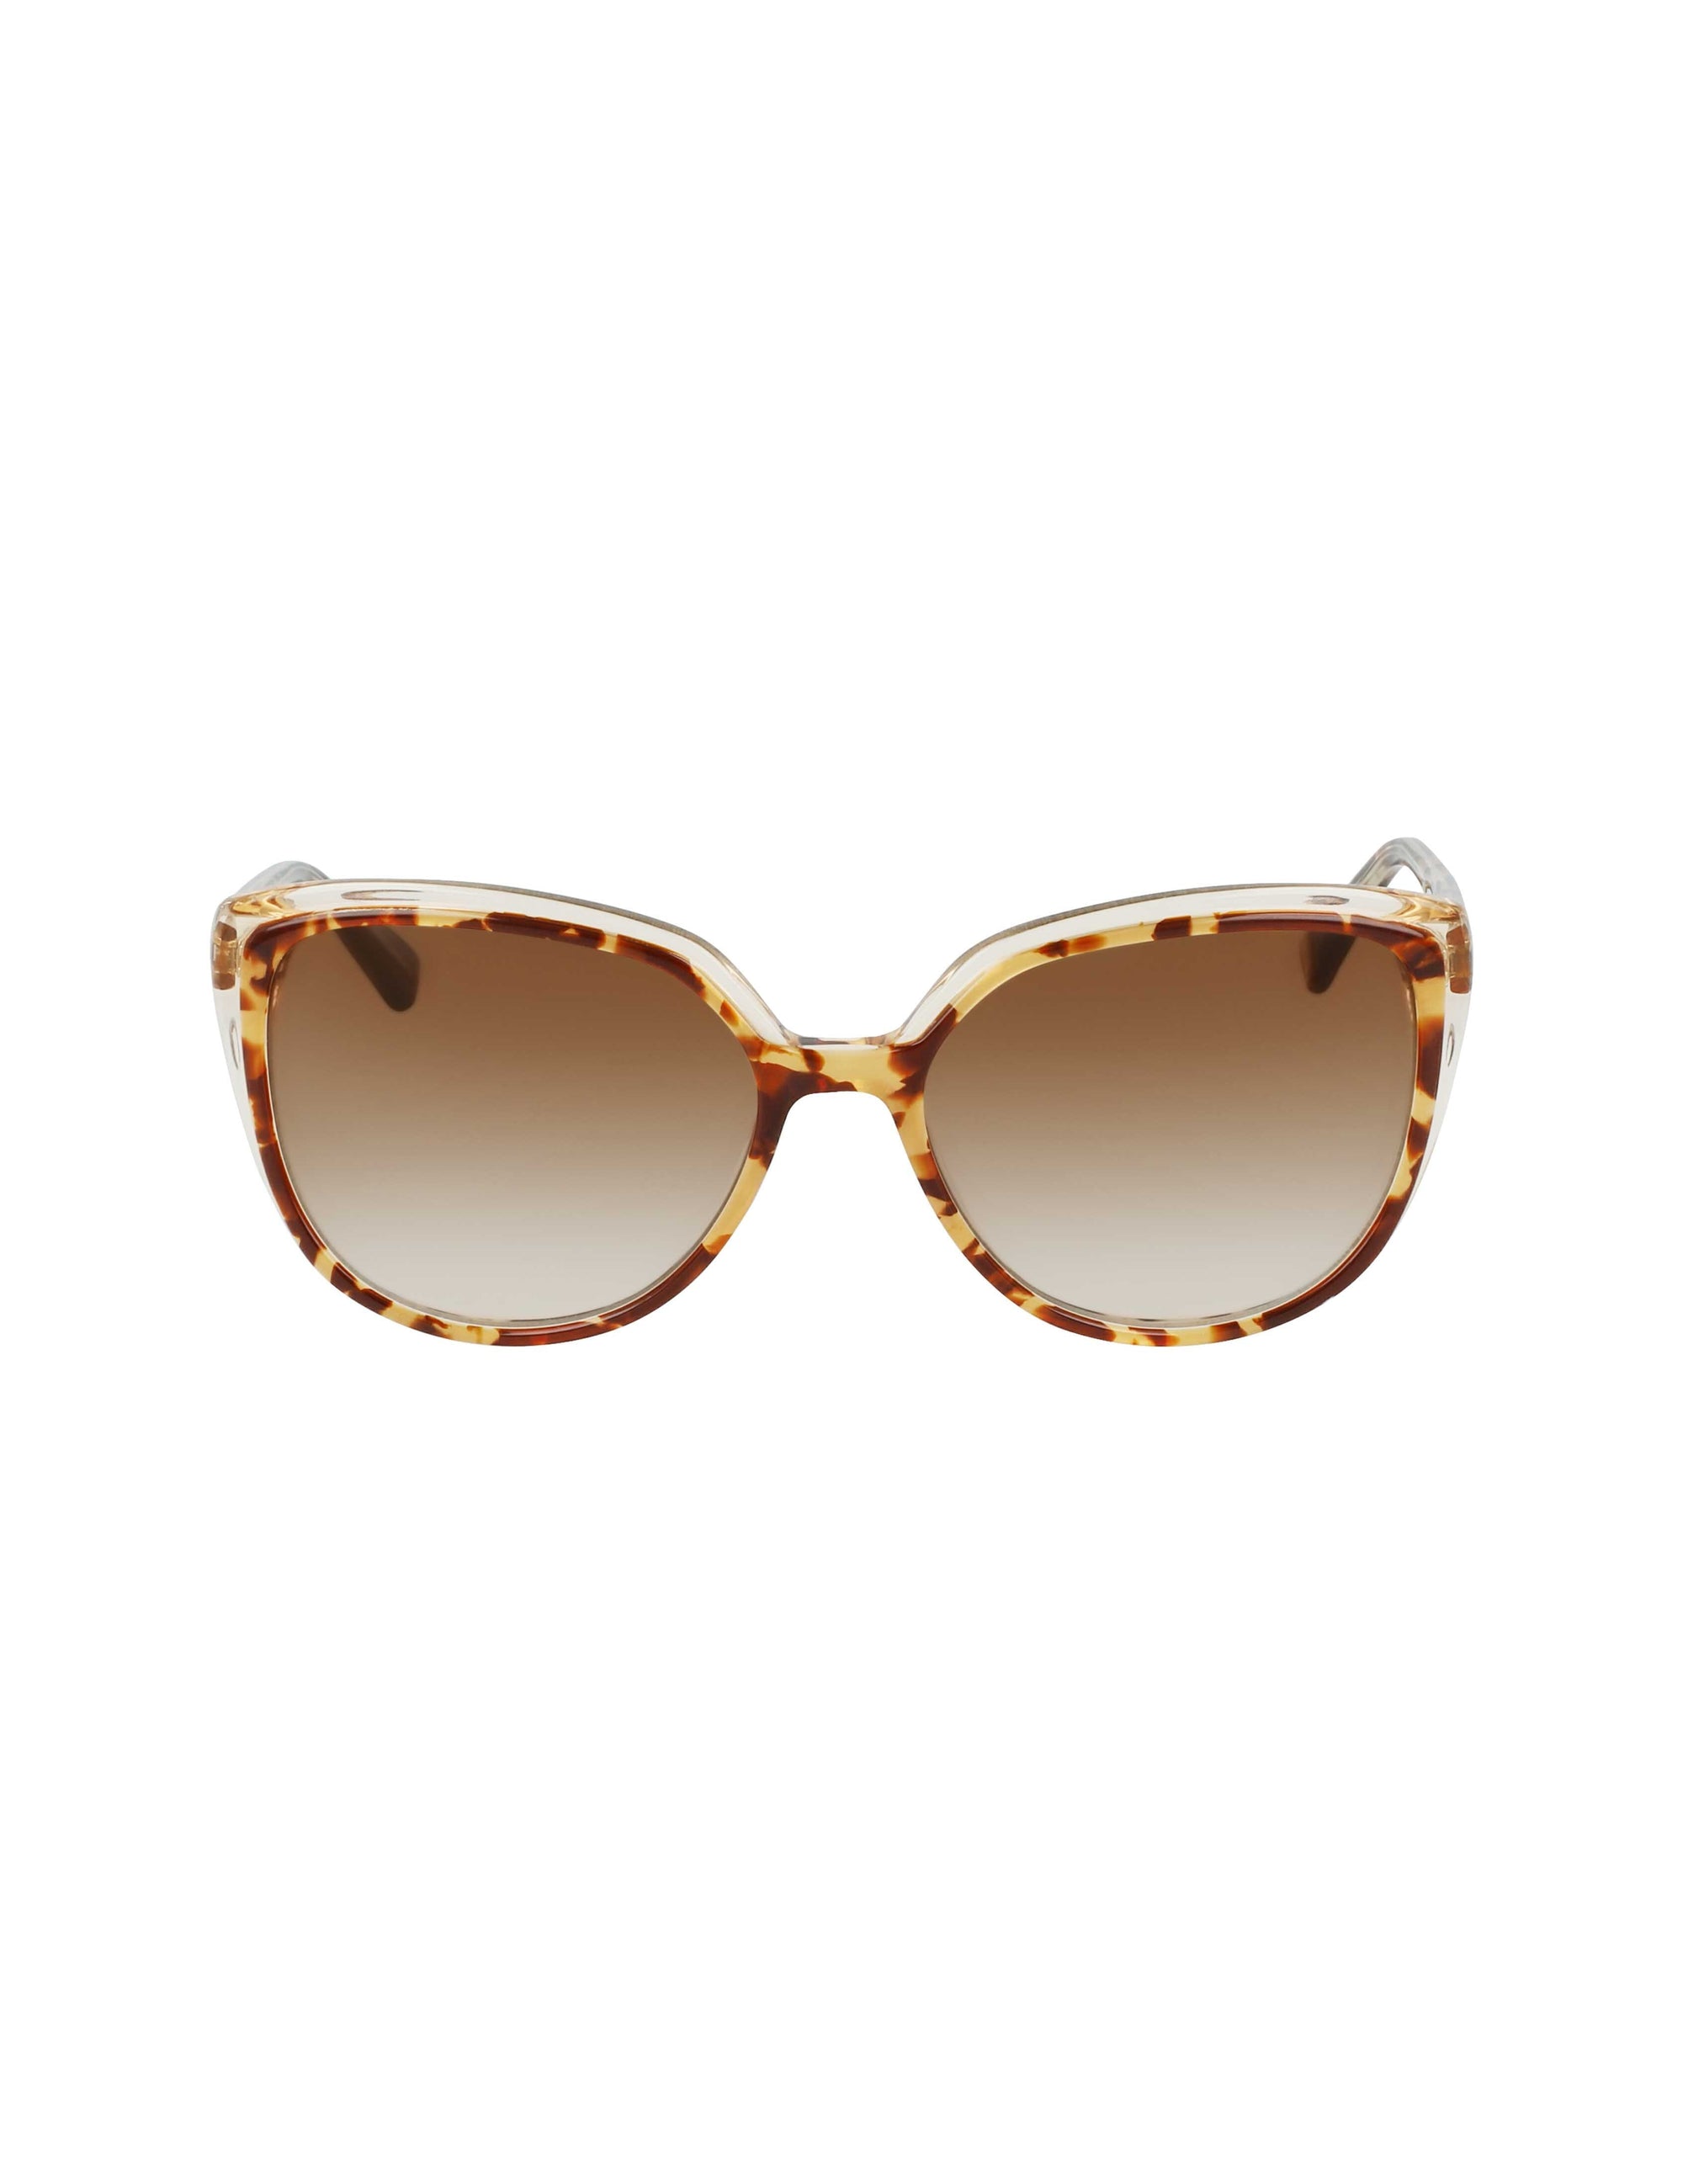 Anne Klein  Tortoise Cat-Eye Sunglasses